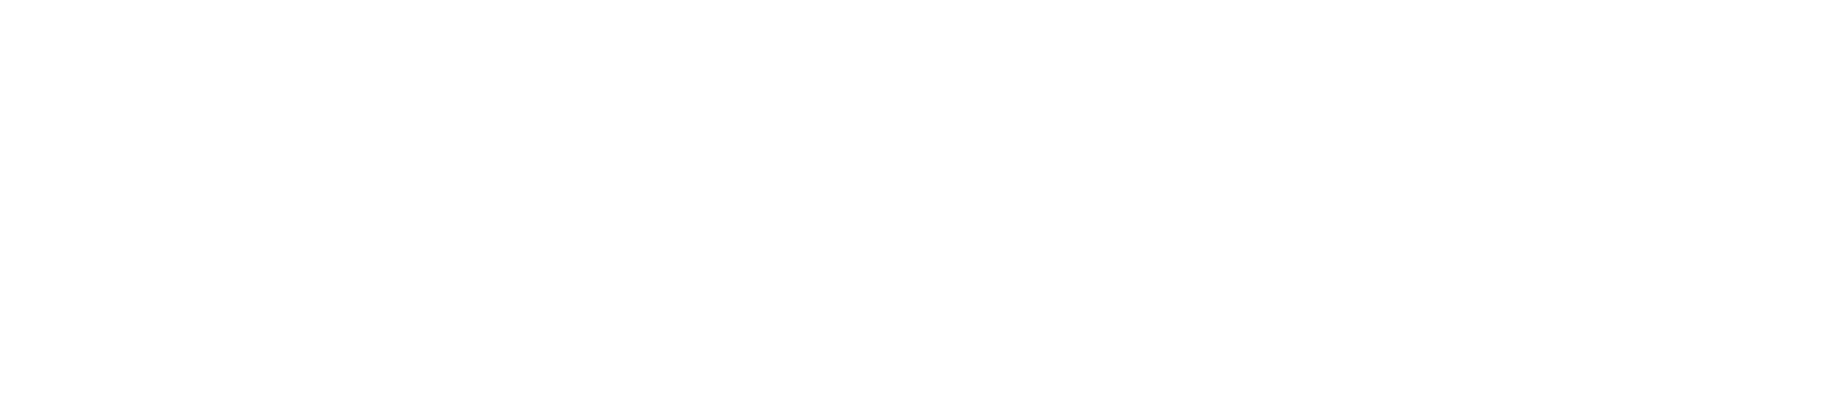 Bracalente Manufacturing Group nanomboka tamin'ny 1950